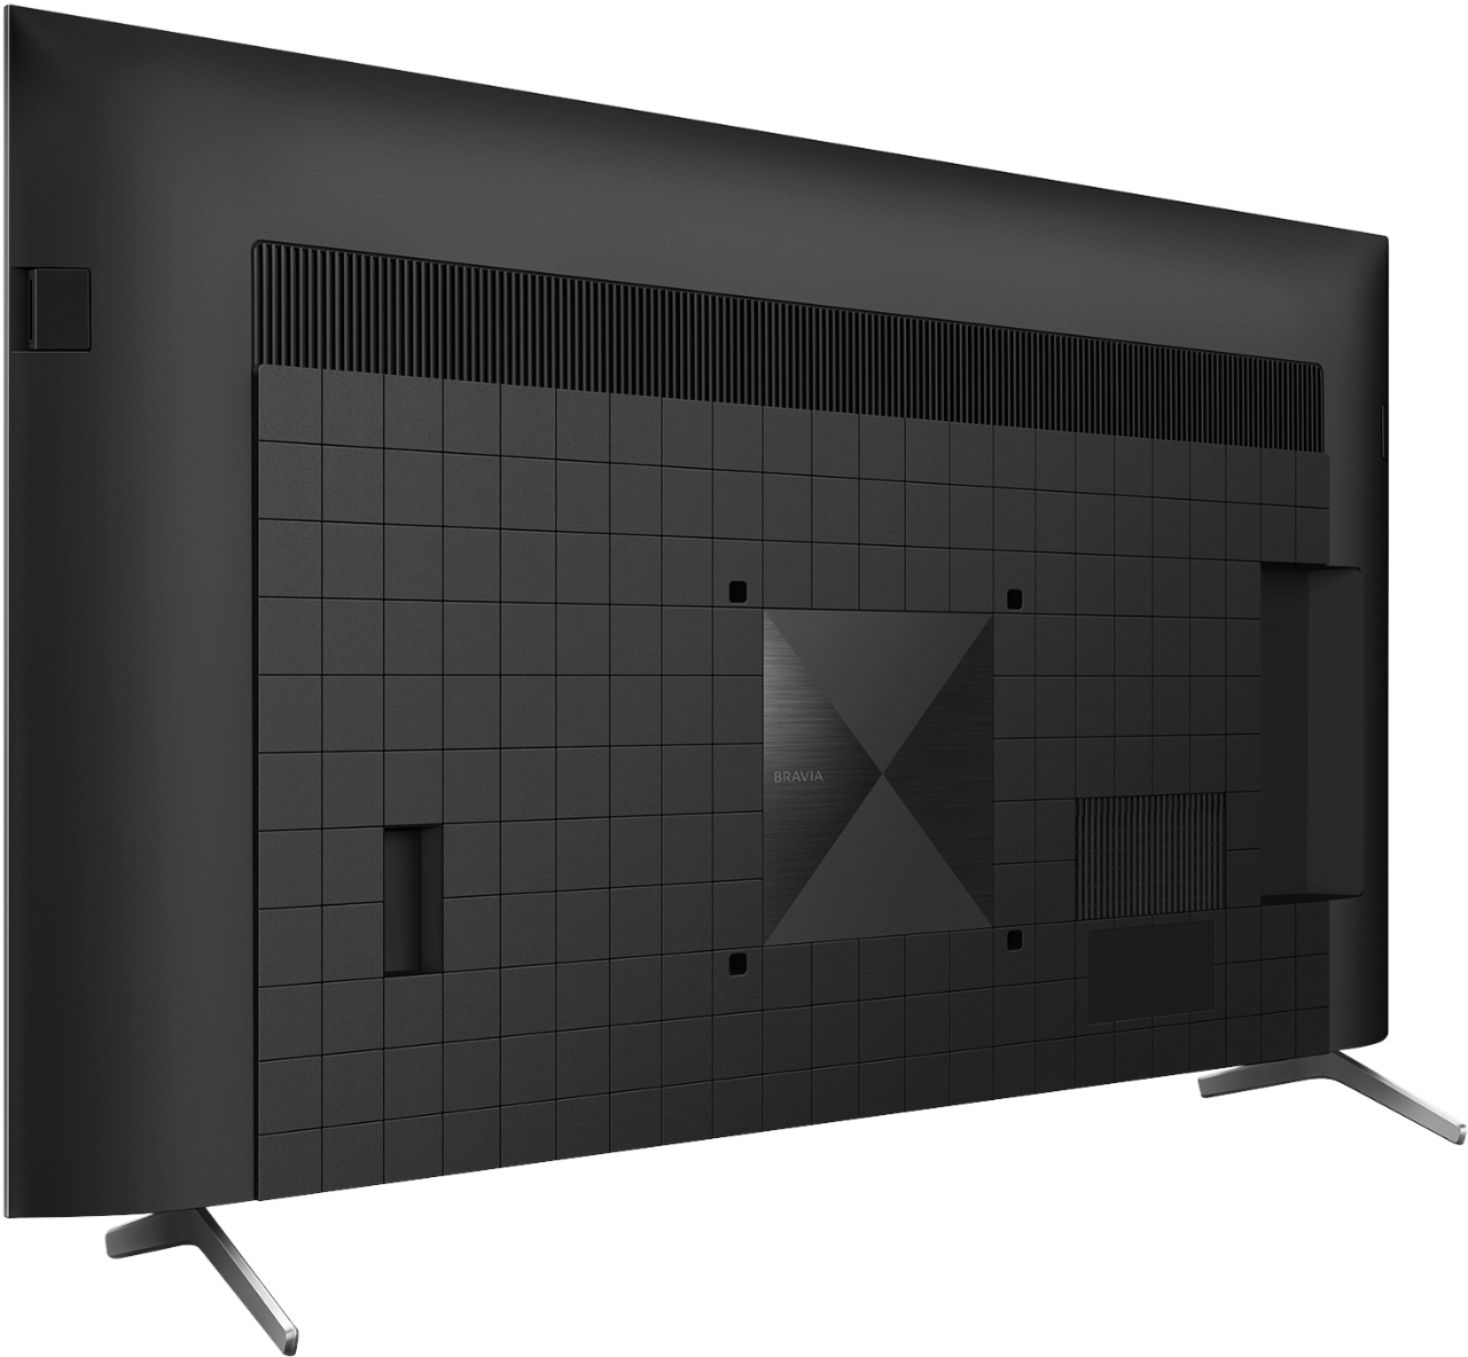 Angle View: Sony - 55" Class BRAVIA XR X90J Series LED 4K UHD Smart Google TV